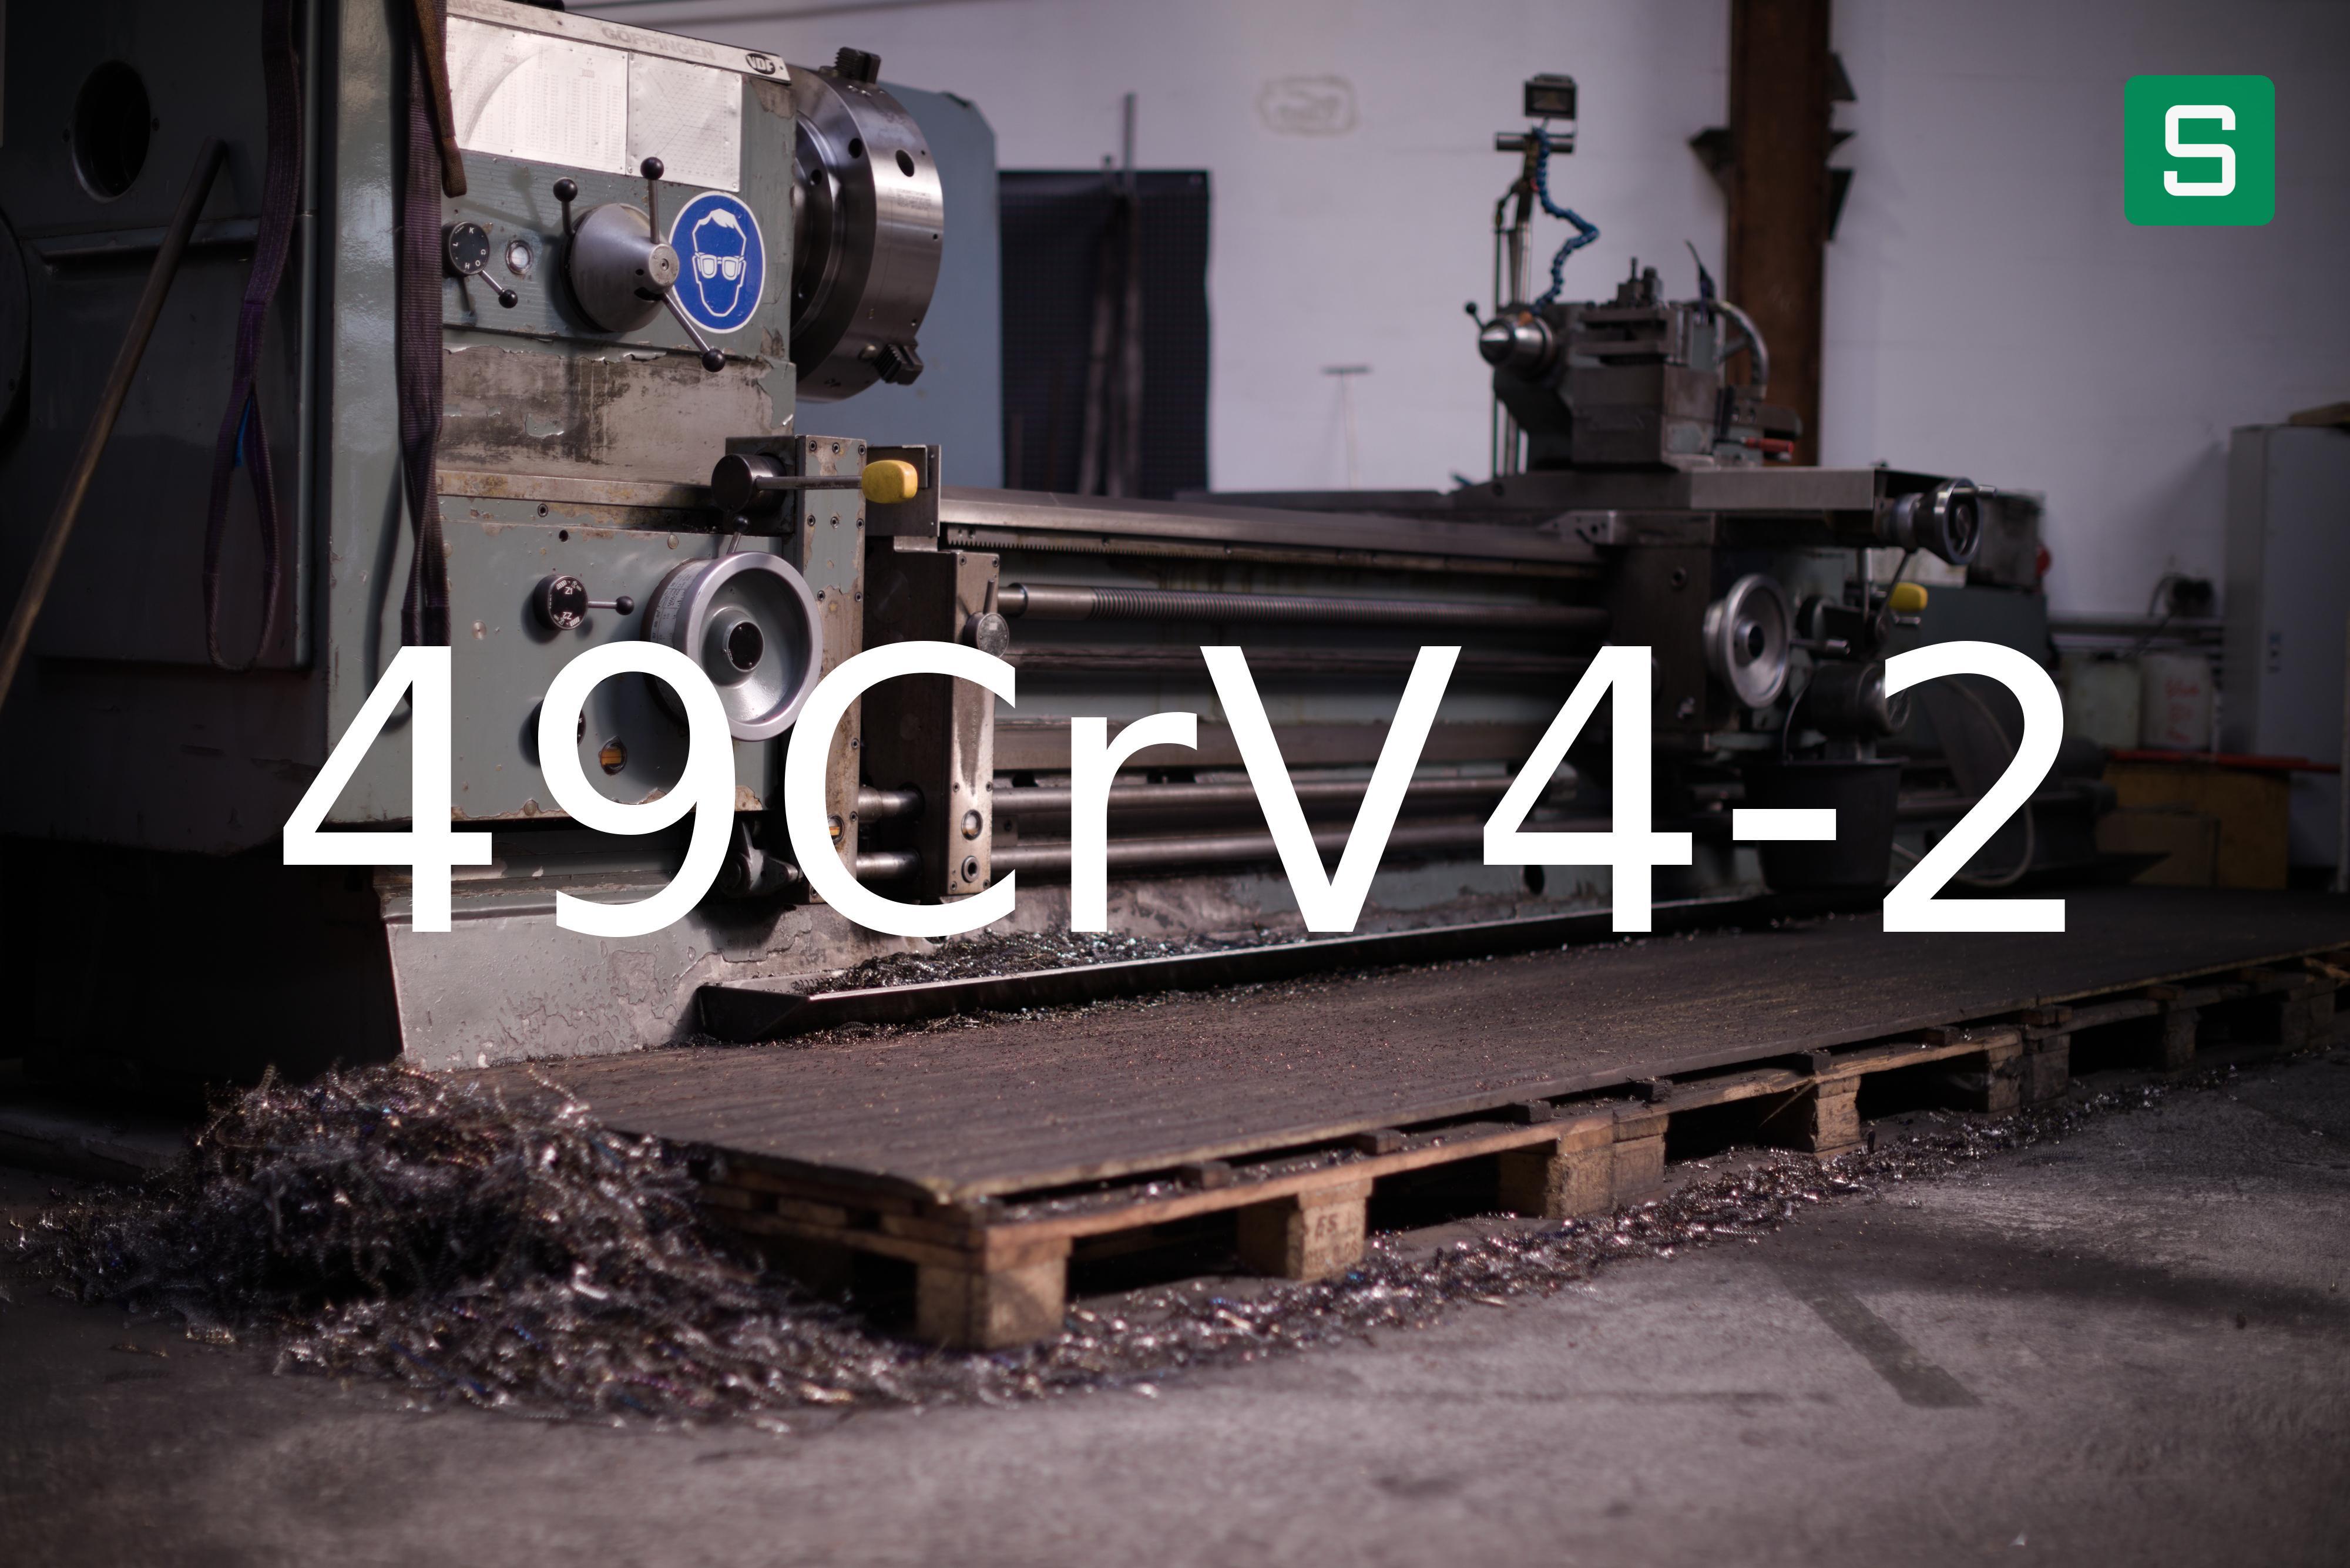 Steel Material: 49CrV4-2